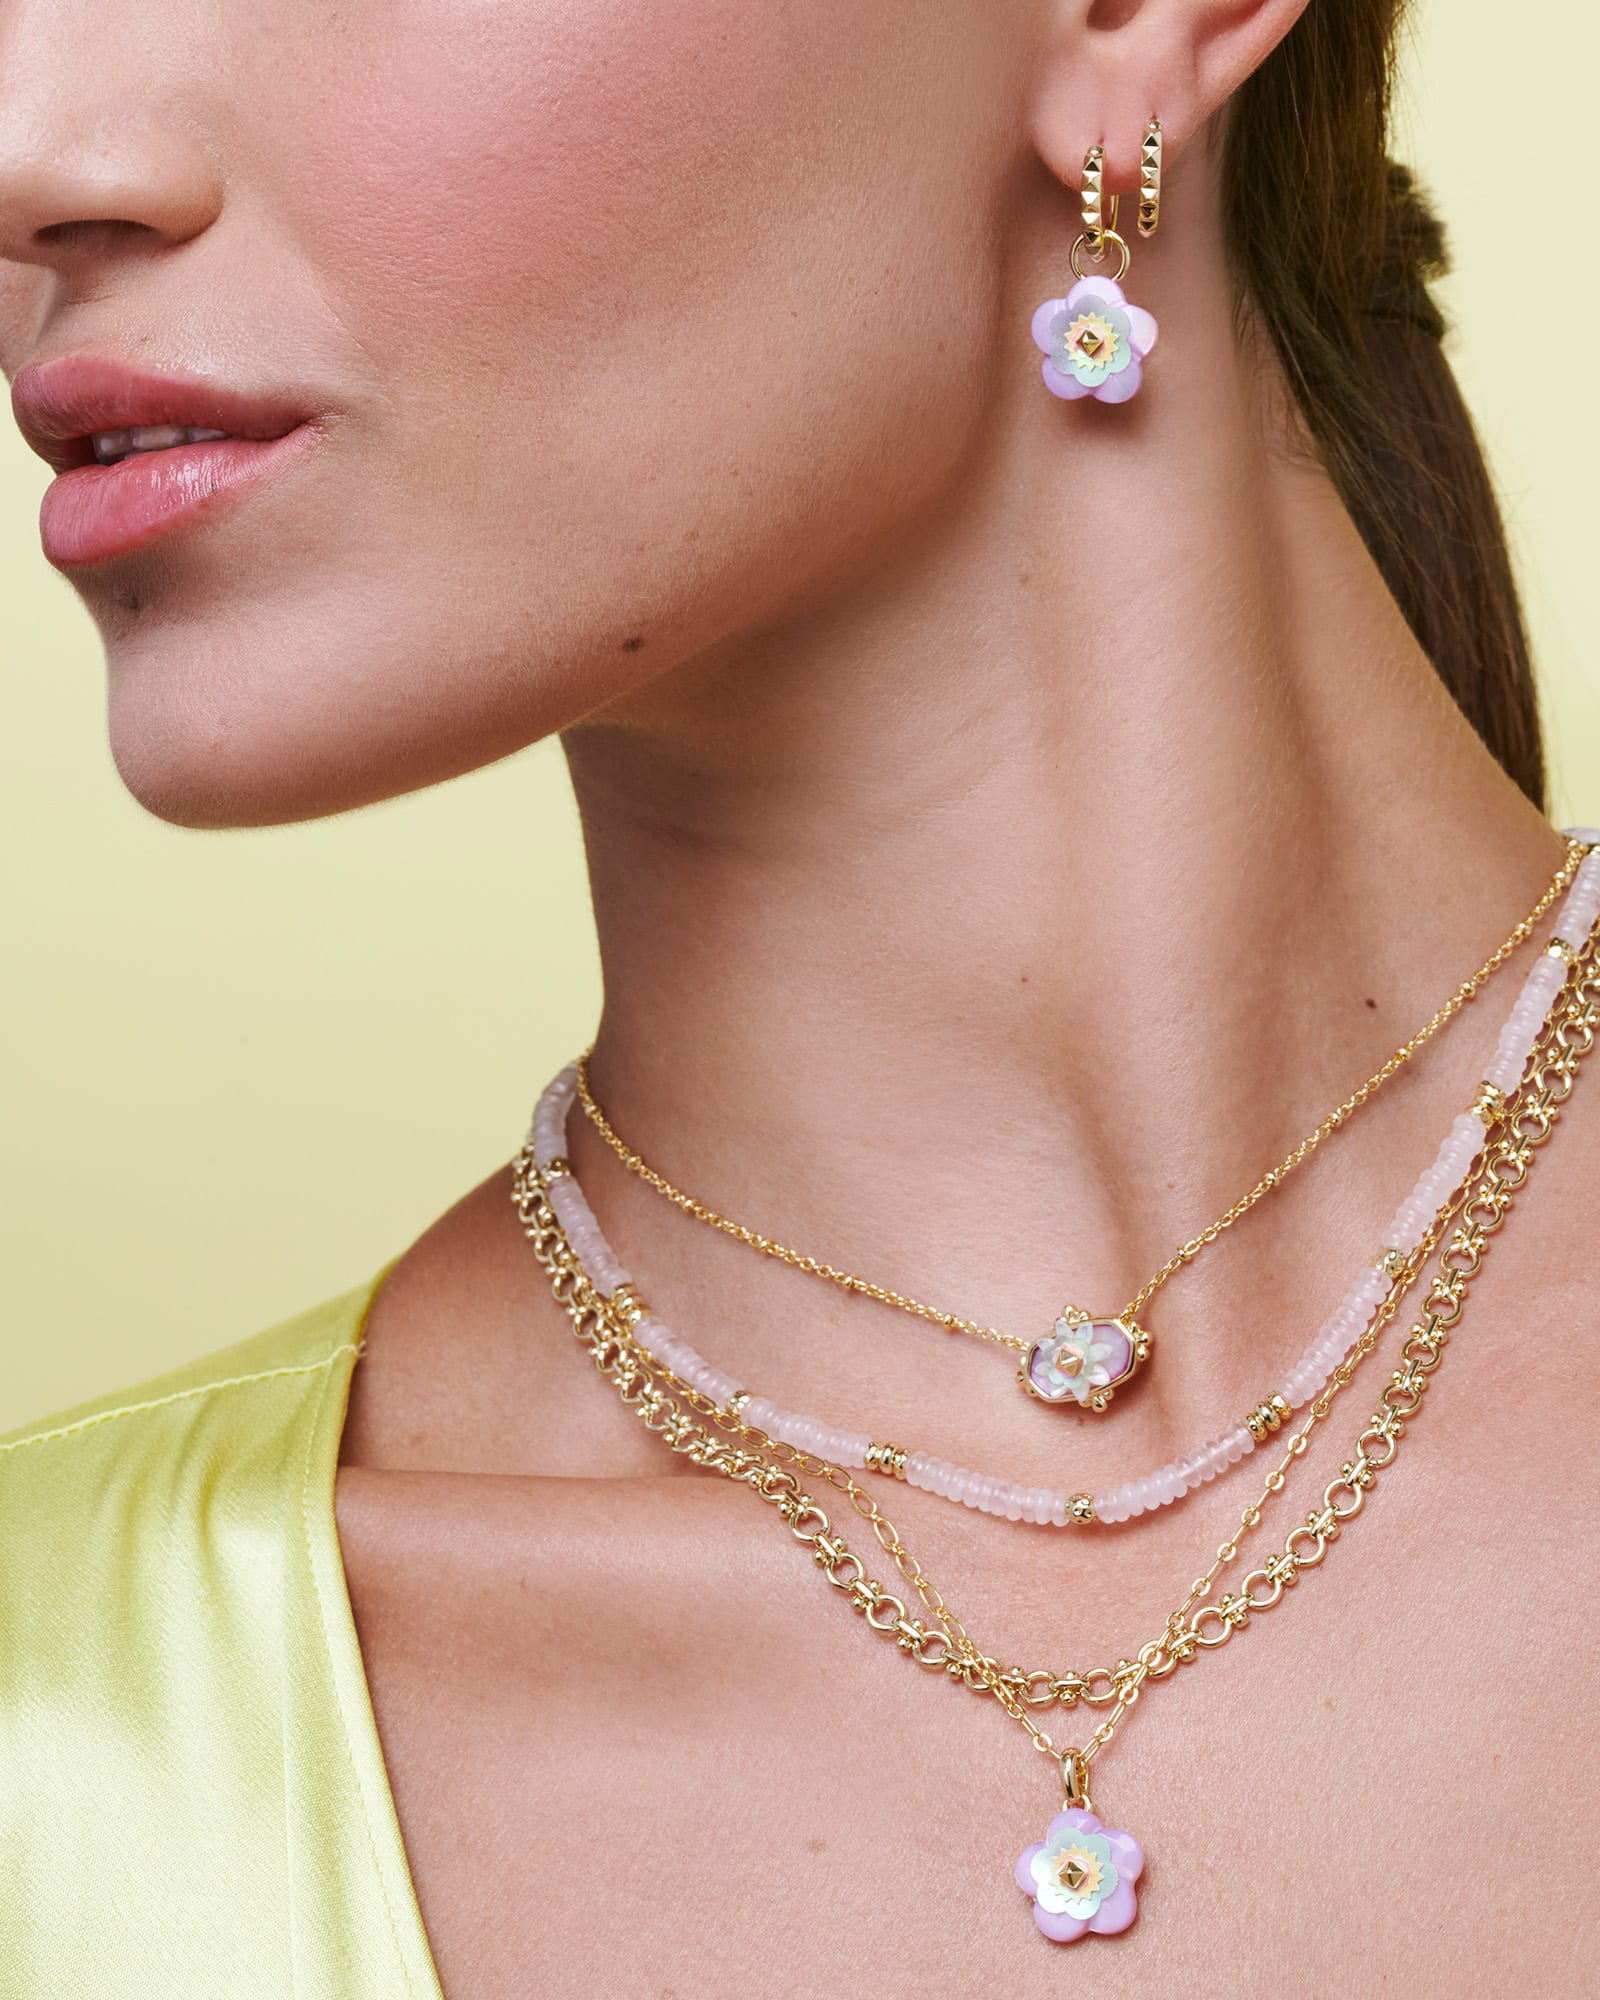 Deliah Gold Strand Necklace in Rose Quartz